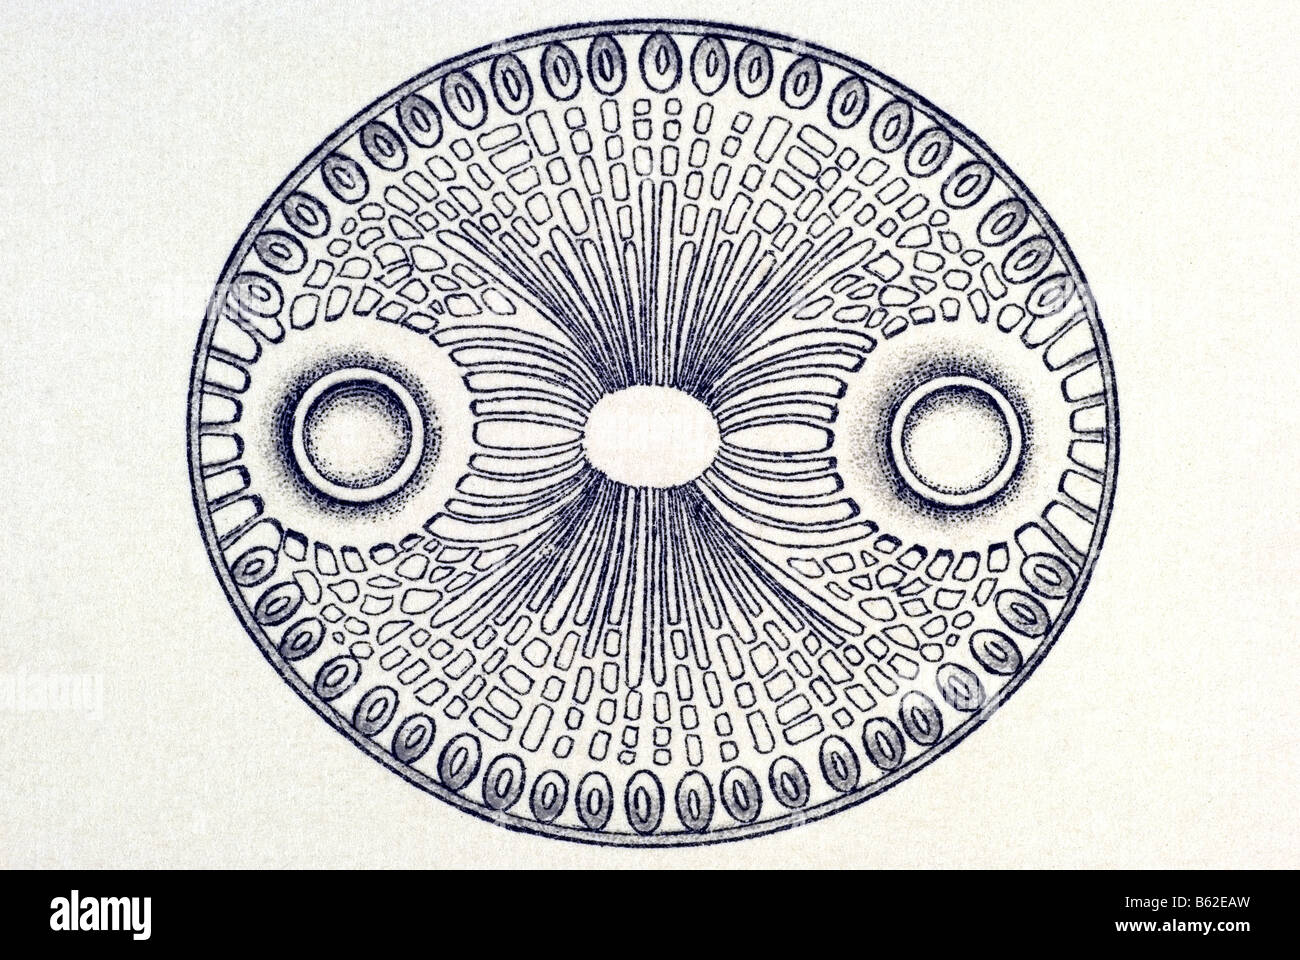 Diatomeen / Schatellinge Name Triceratium, Haeckel, Kunstformen der Natur, Jugendstil, 20. Jahrhundert, Europa Stockfoto